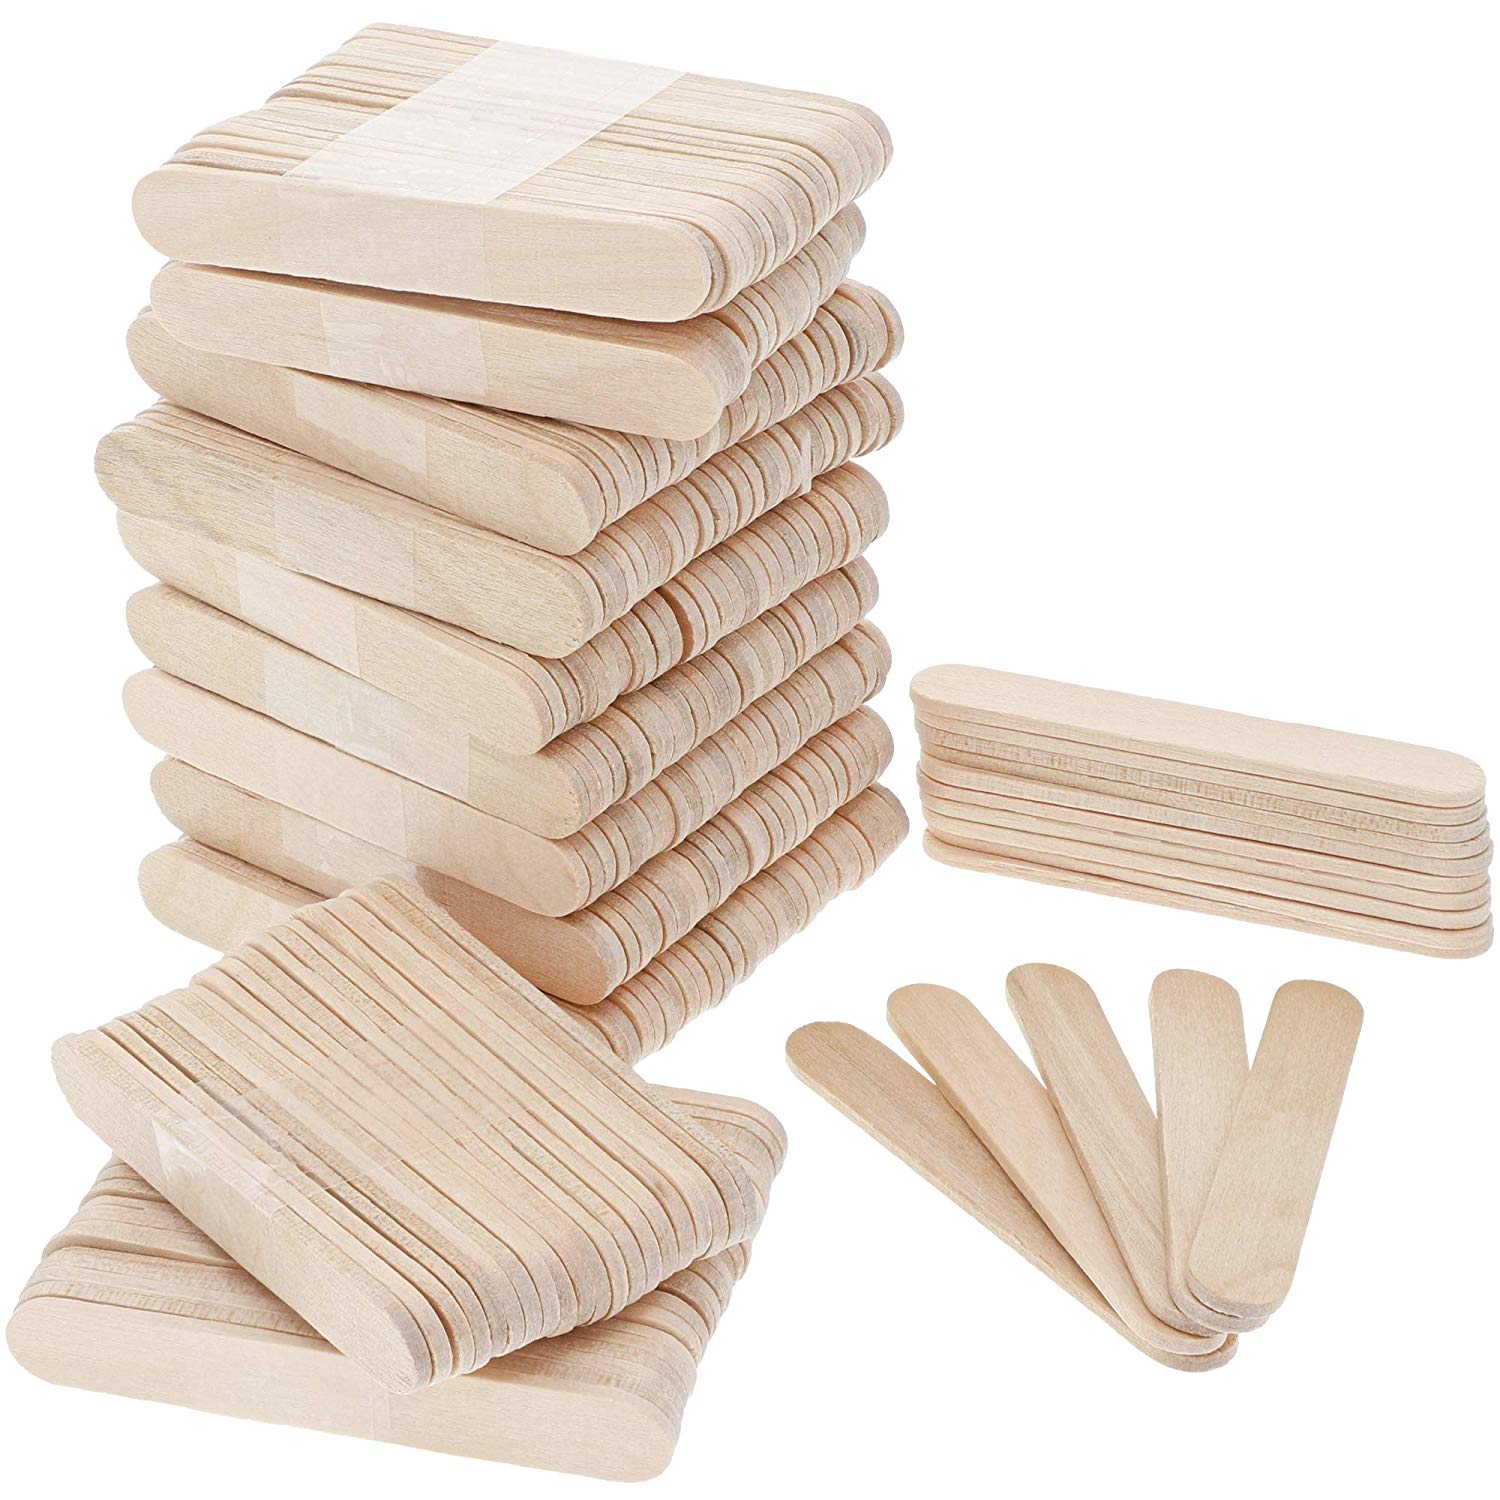 Natural Wooden Craft Sticks (Pack Of 200)